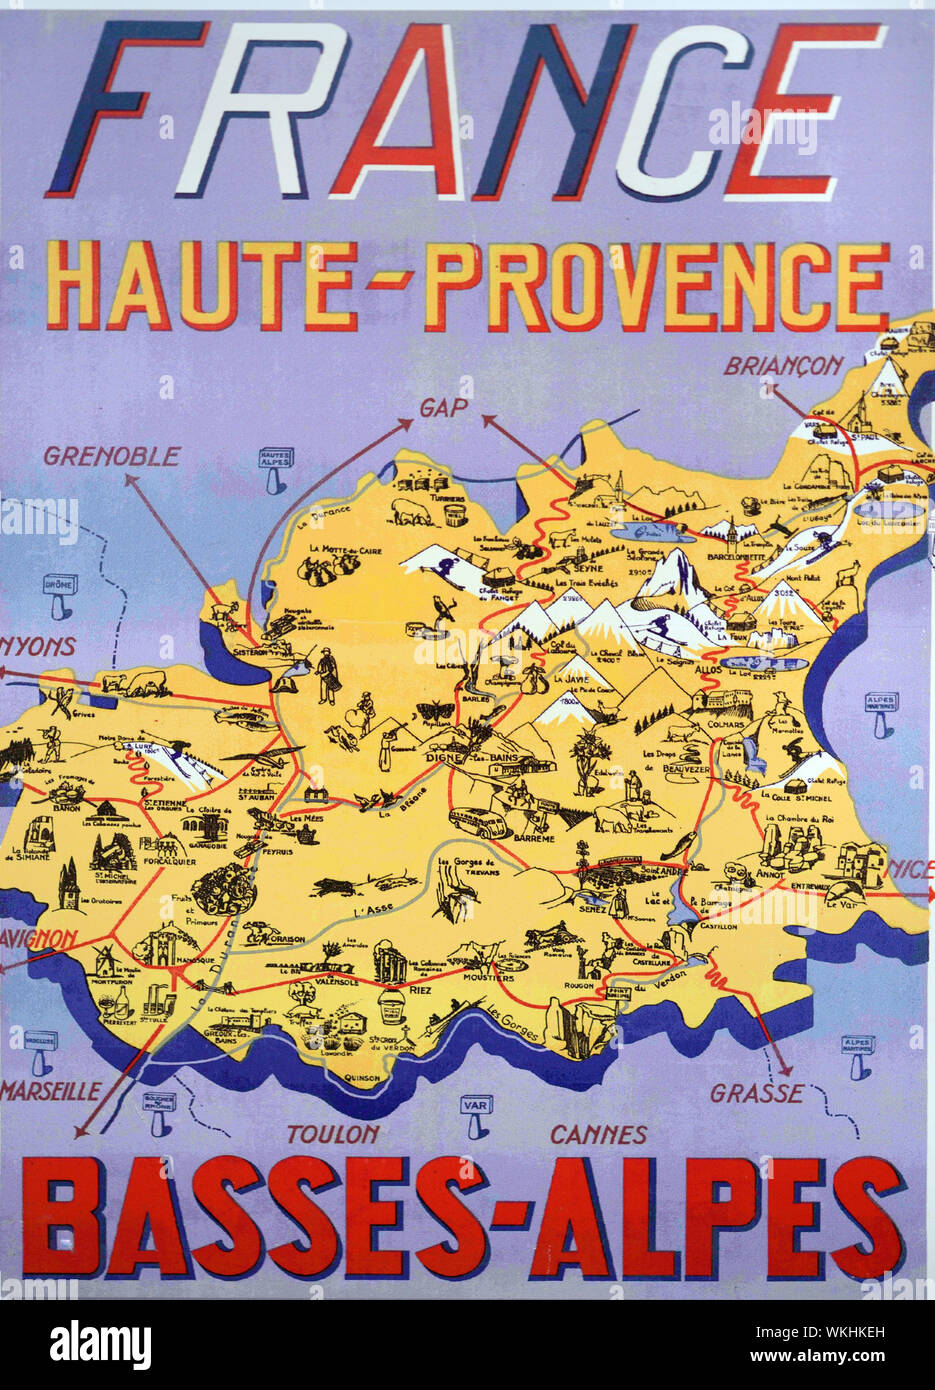 Old or Vintage Tourist Map of Haute Provence, Basses-Alpes or Alpes-de-Haute-Provence France 1950 Stock Photo